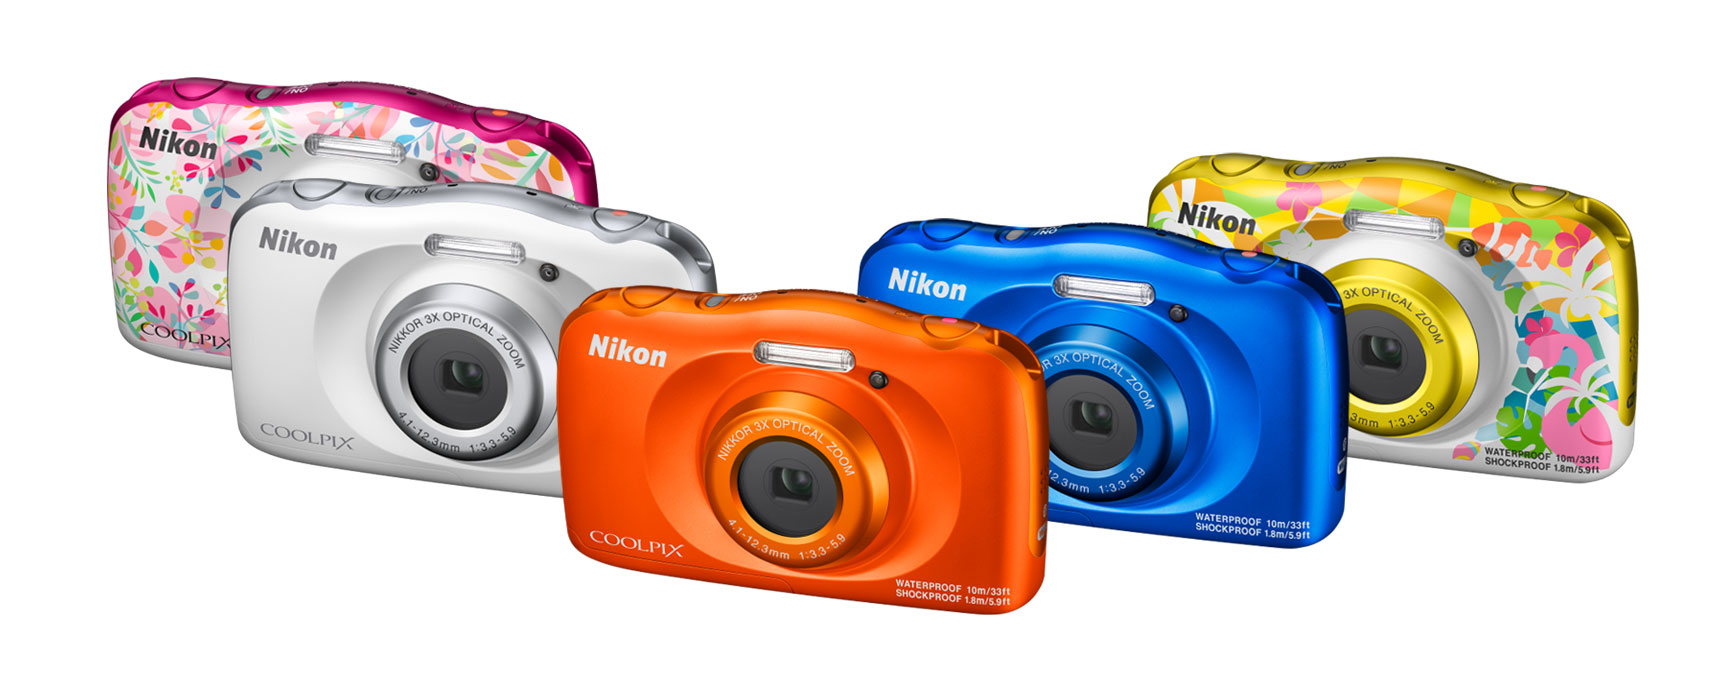 Nikon-W150-4.jpg